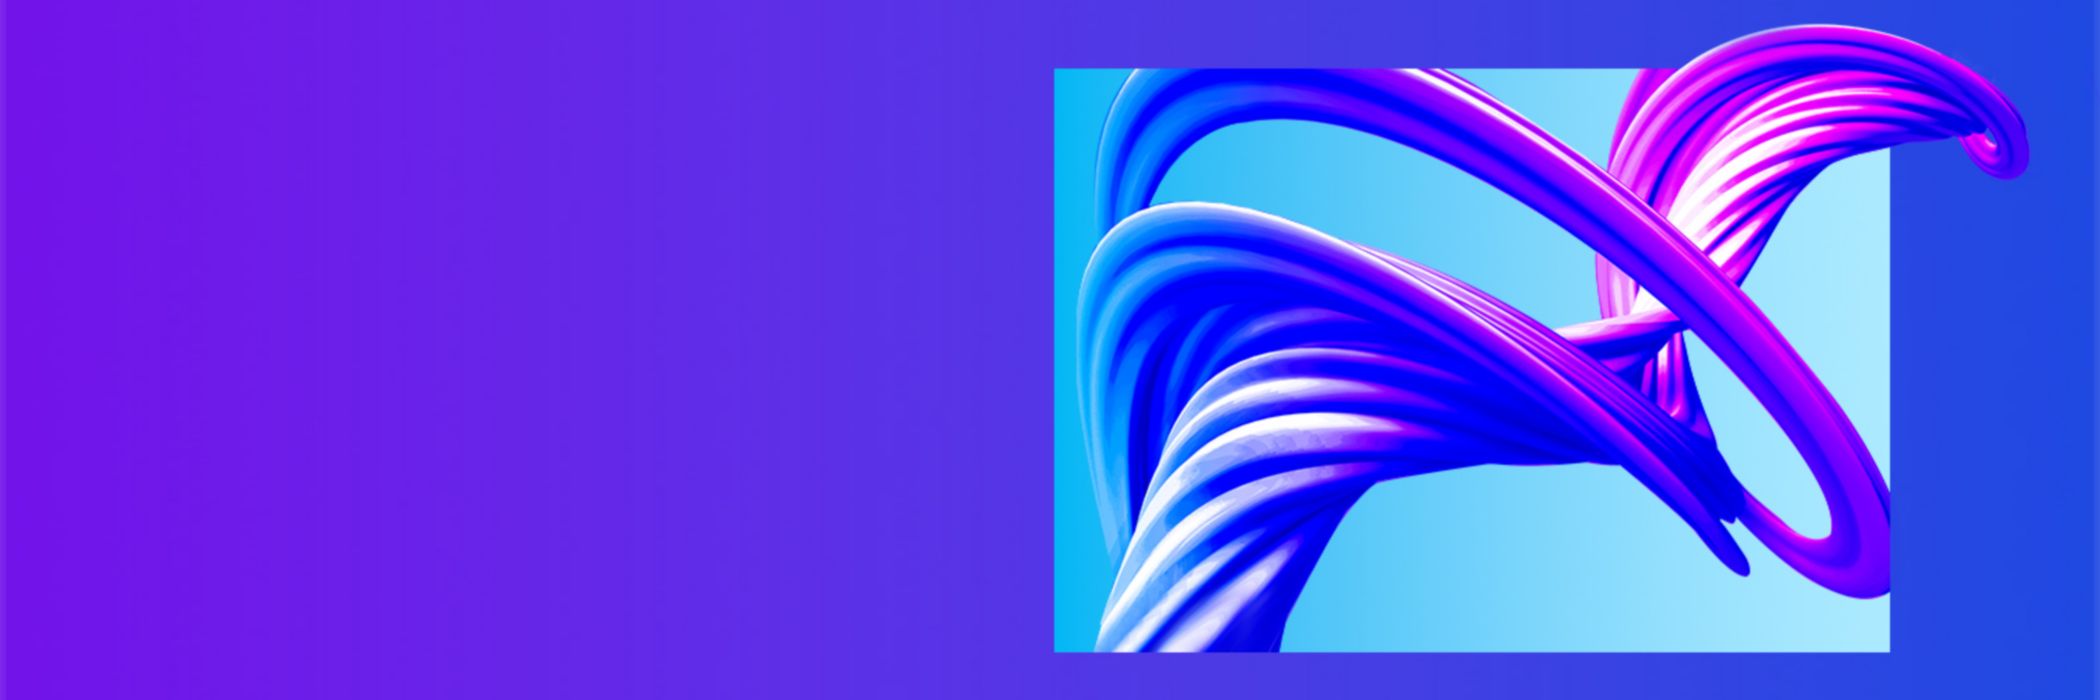 Blue purple swirly abstract